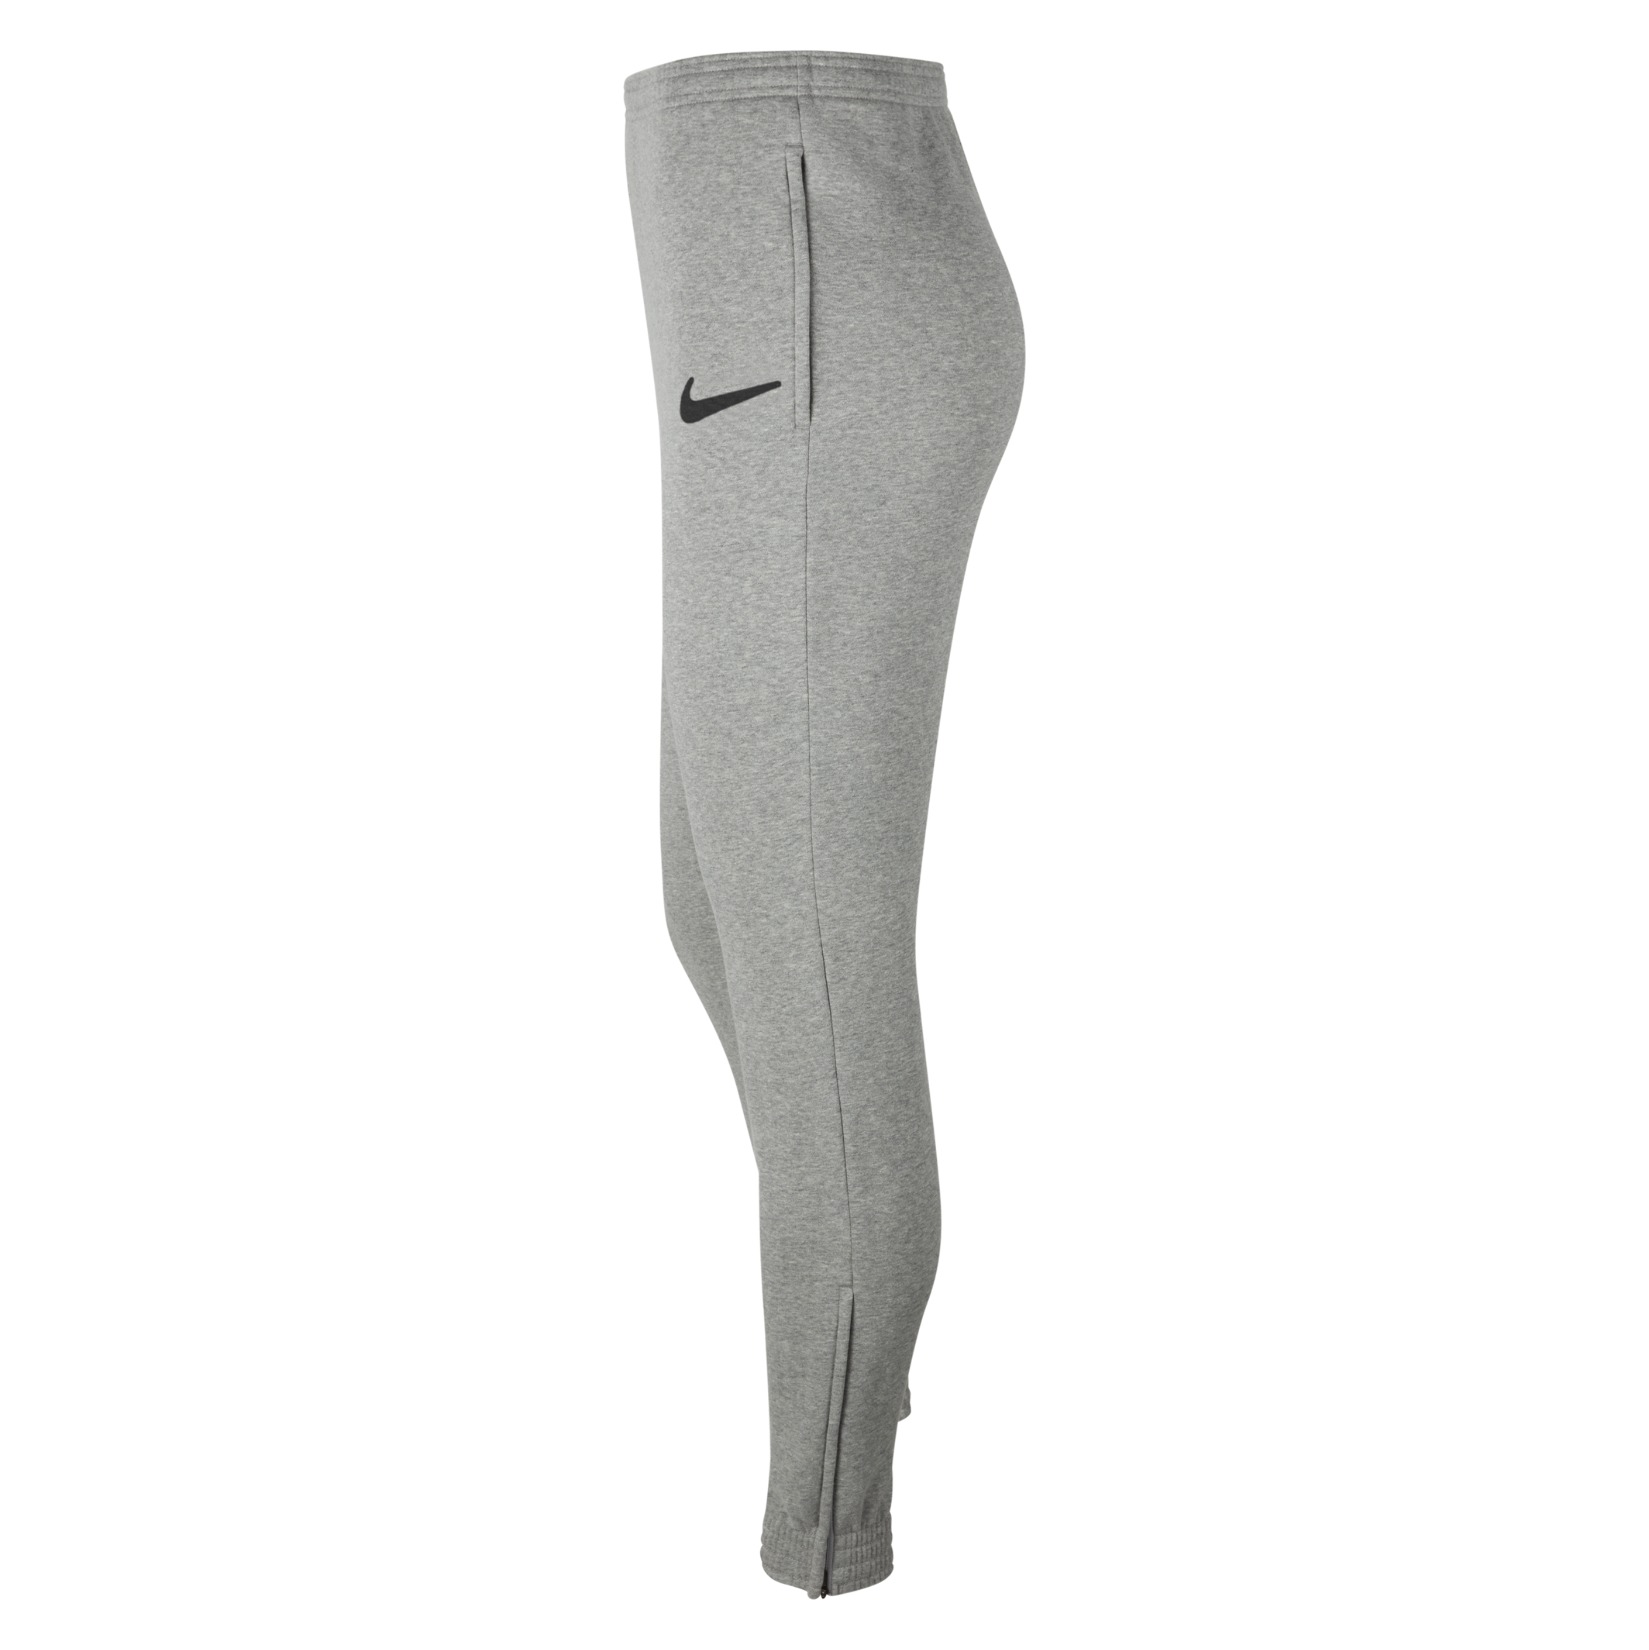 Nike Team Club 20 Fleece Pants (M)